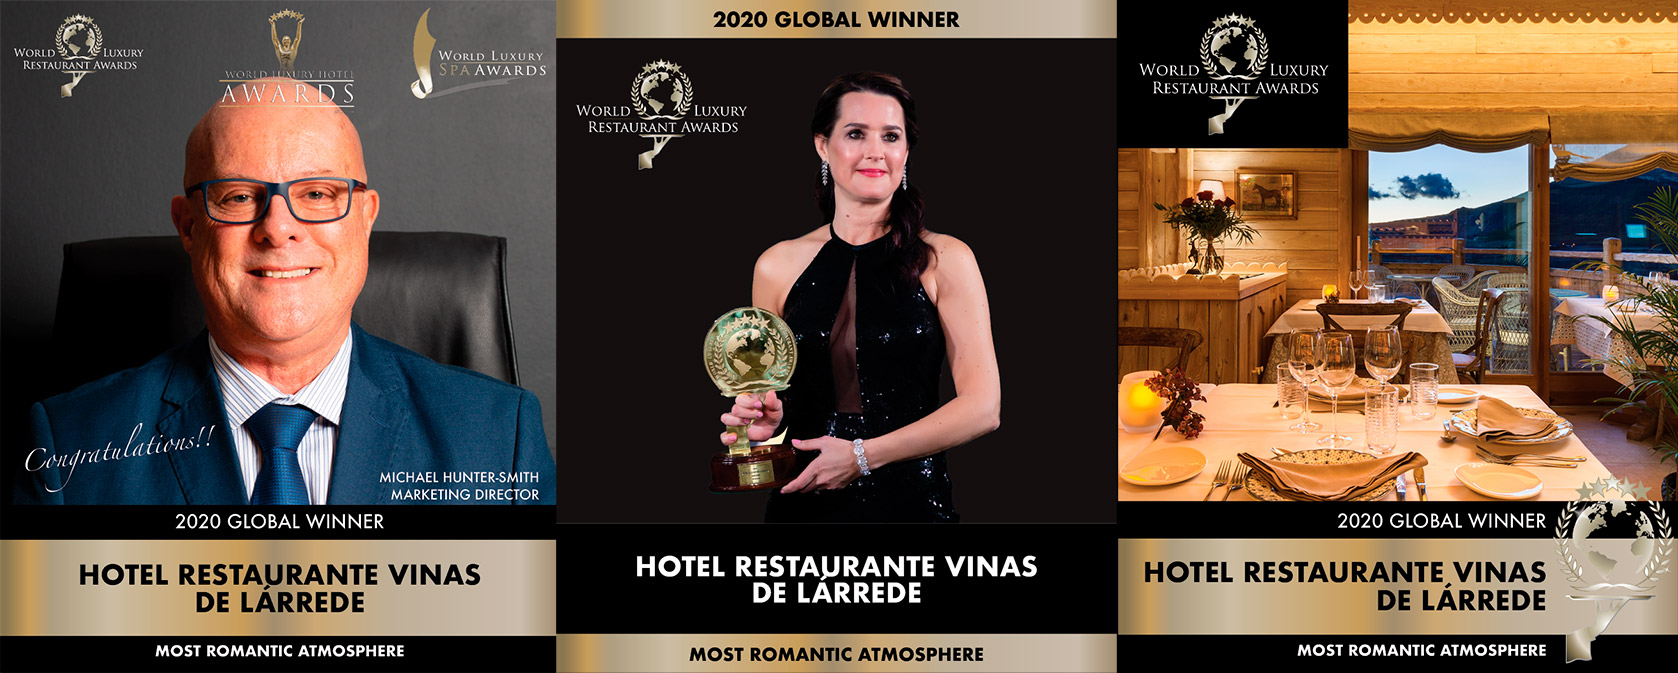 World Luxury Restaurant Awards